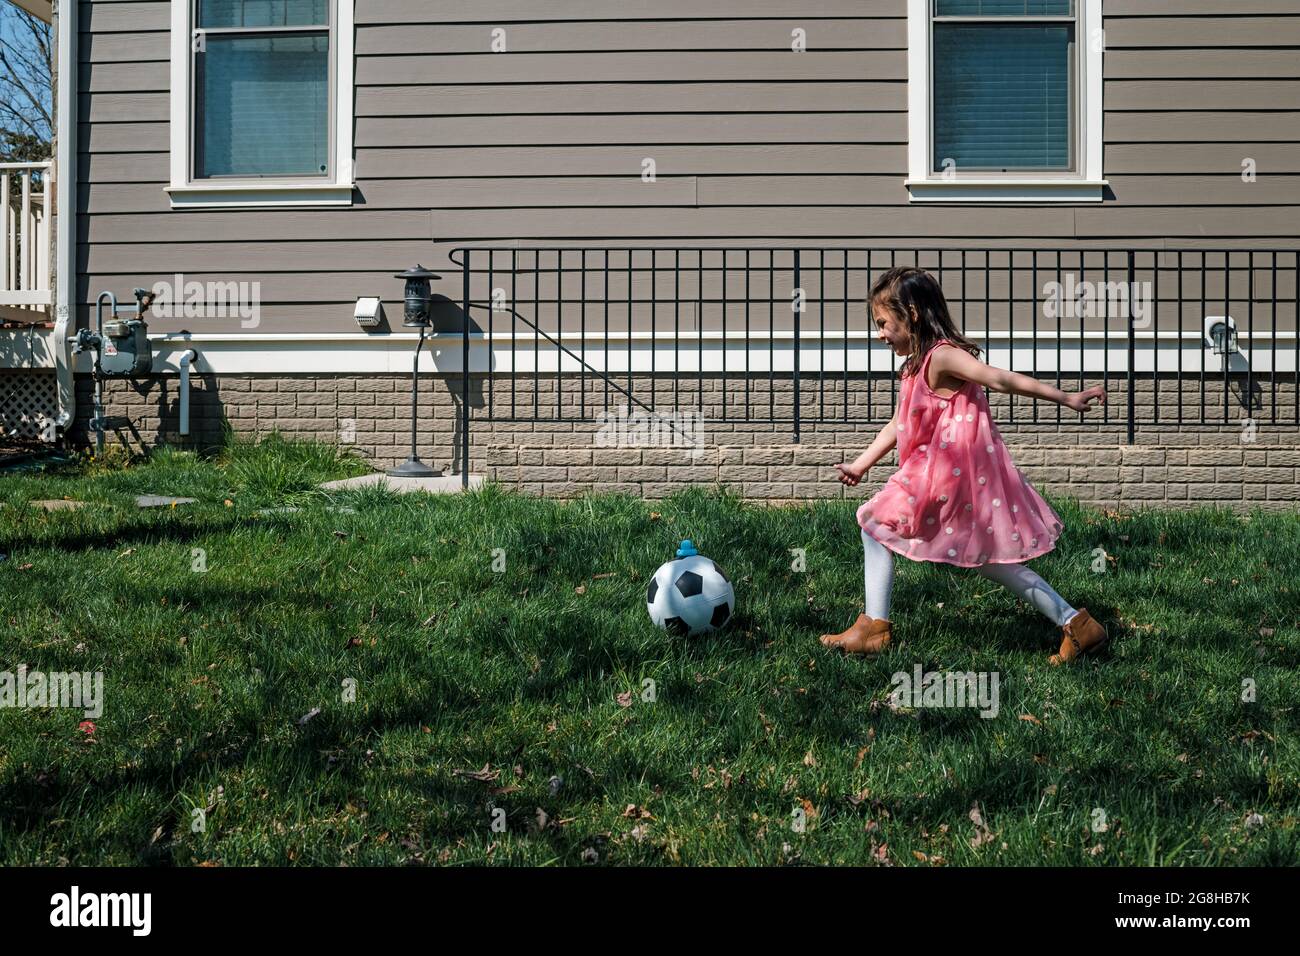 Little girl in pink dress kicking soccer ball in back yard Stock Photo